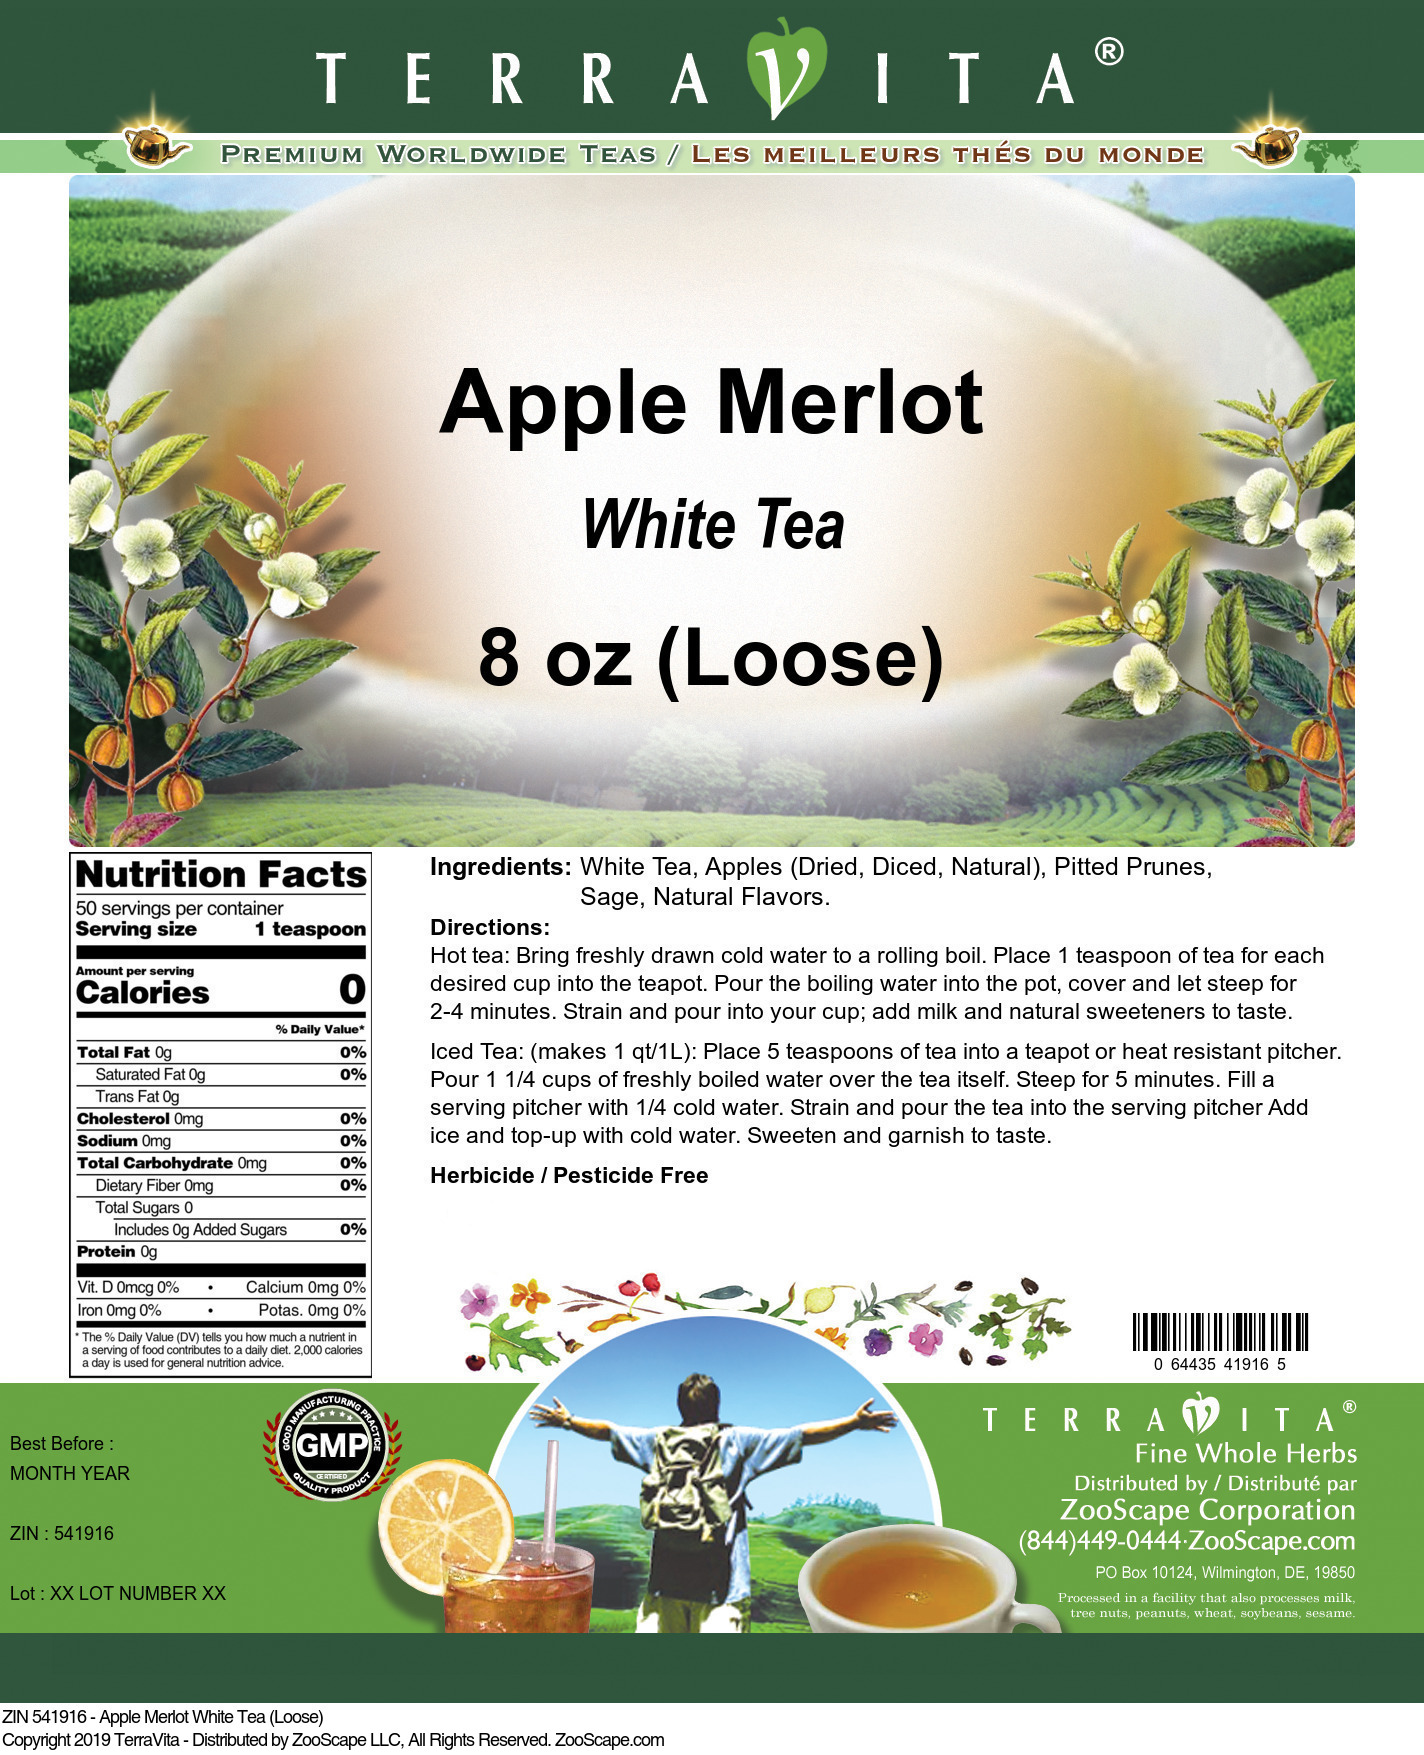 Apple Merlot White Tea (Loose) - Label